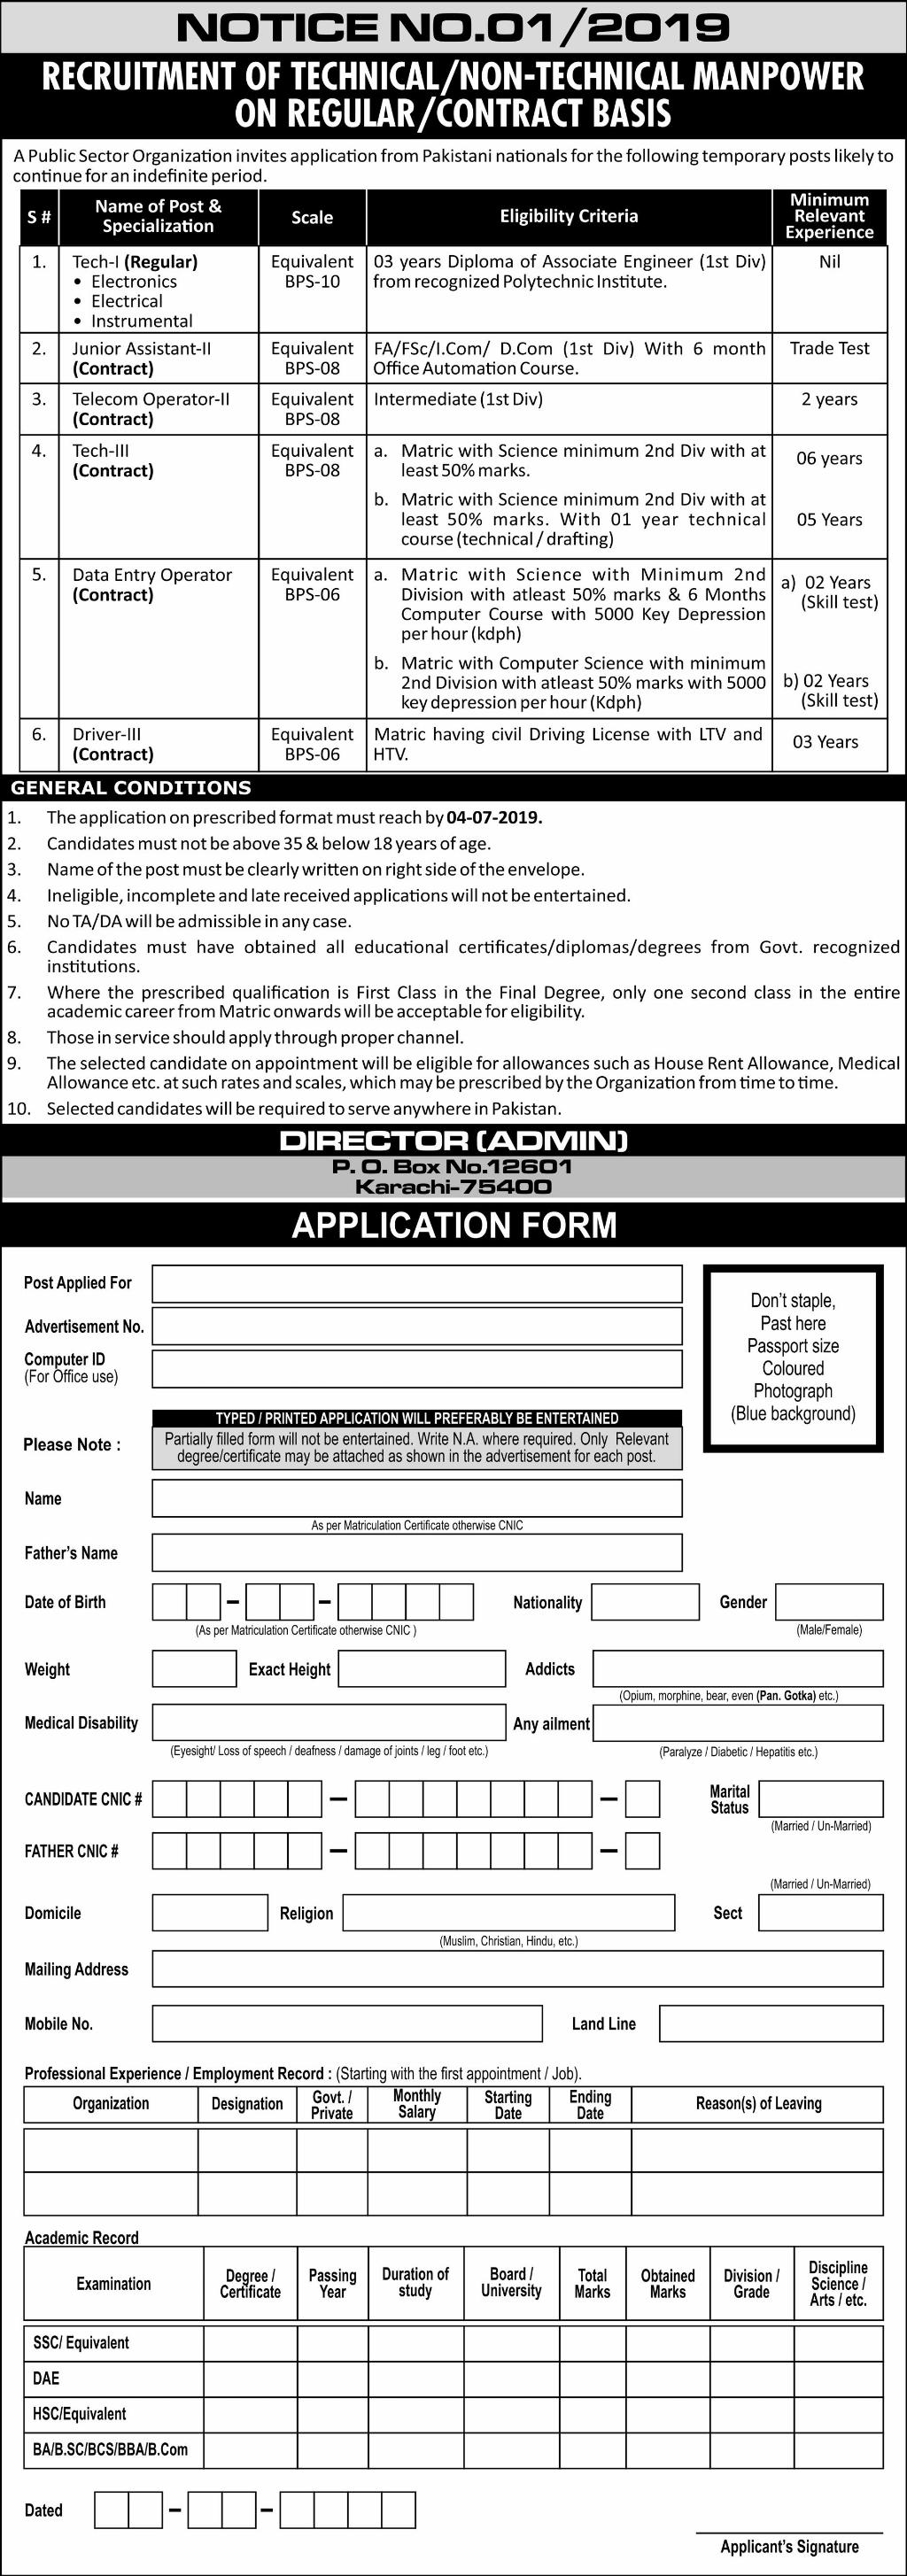 PAEC PO BOX 12601 Jobs 2019 Application form Eligibility Criteria